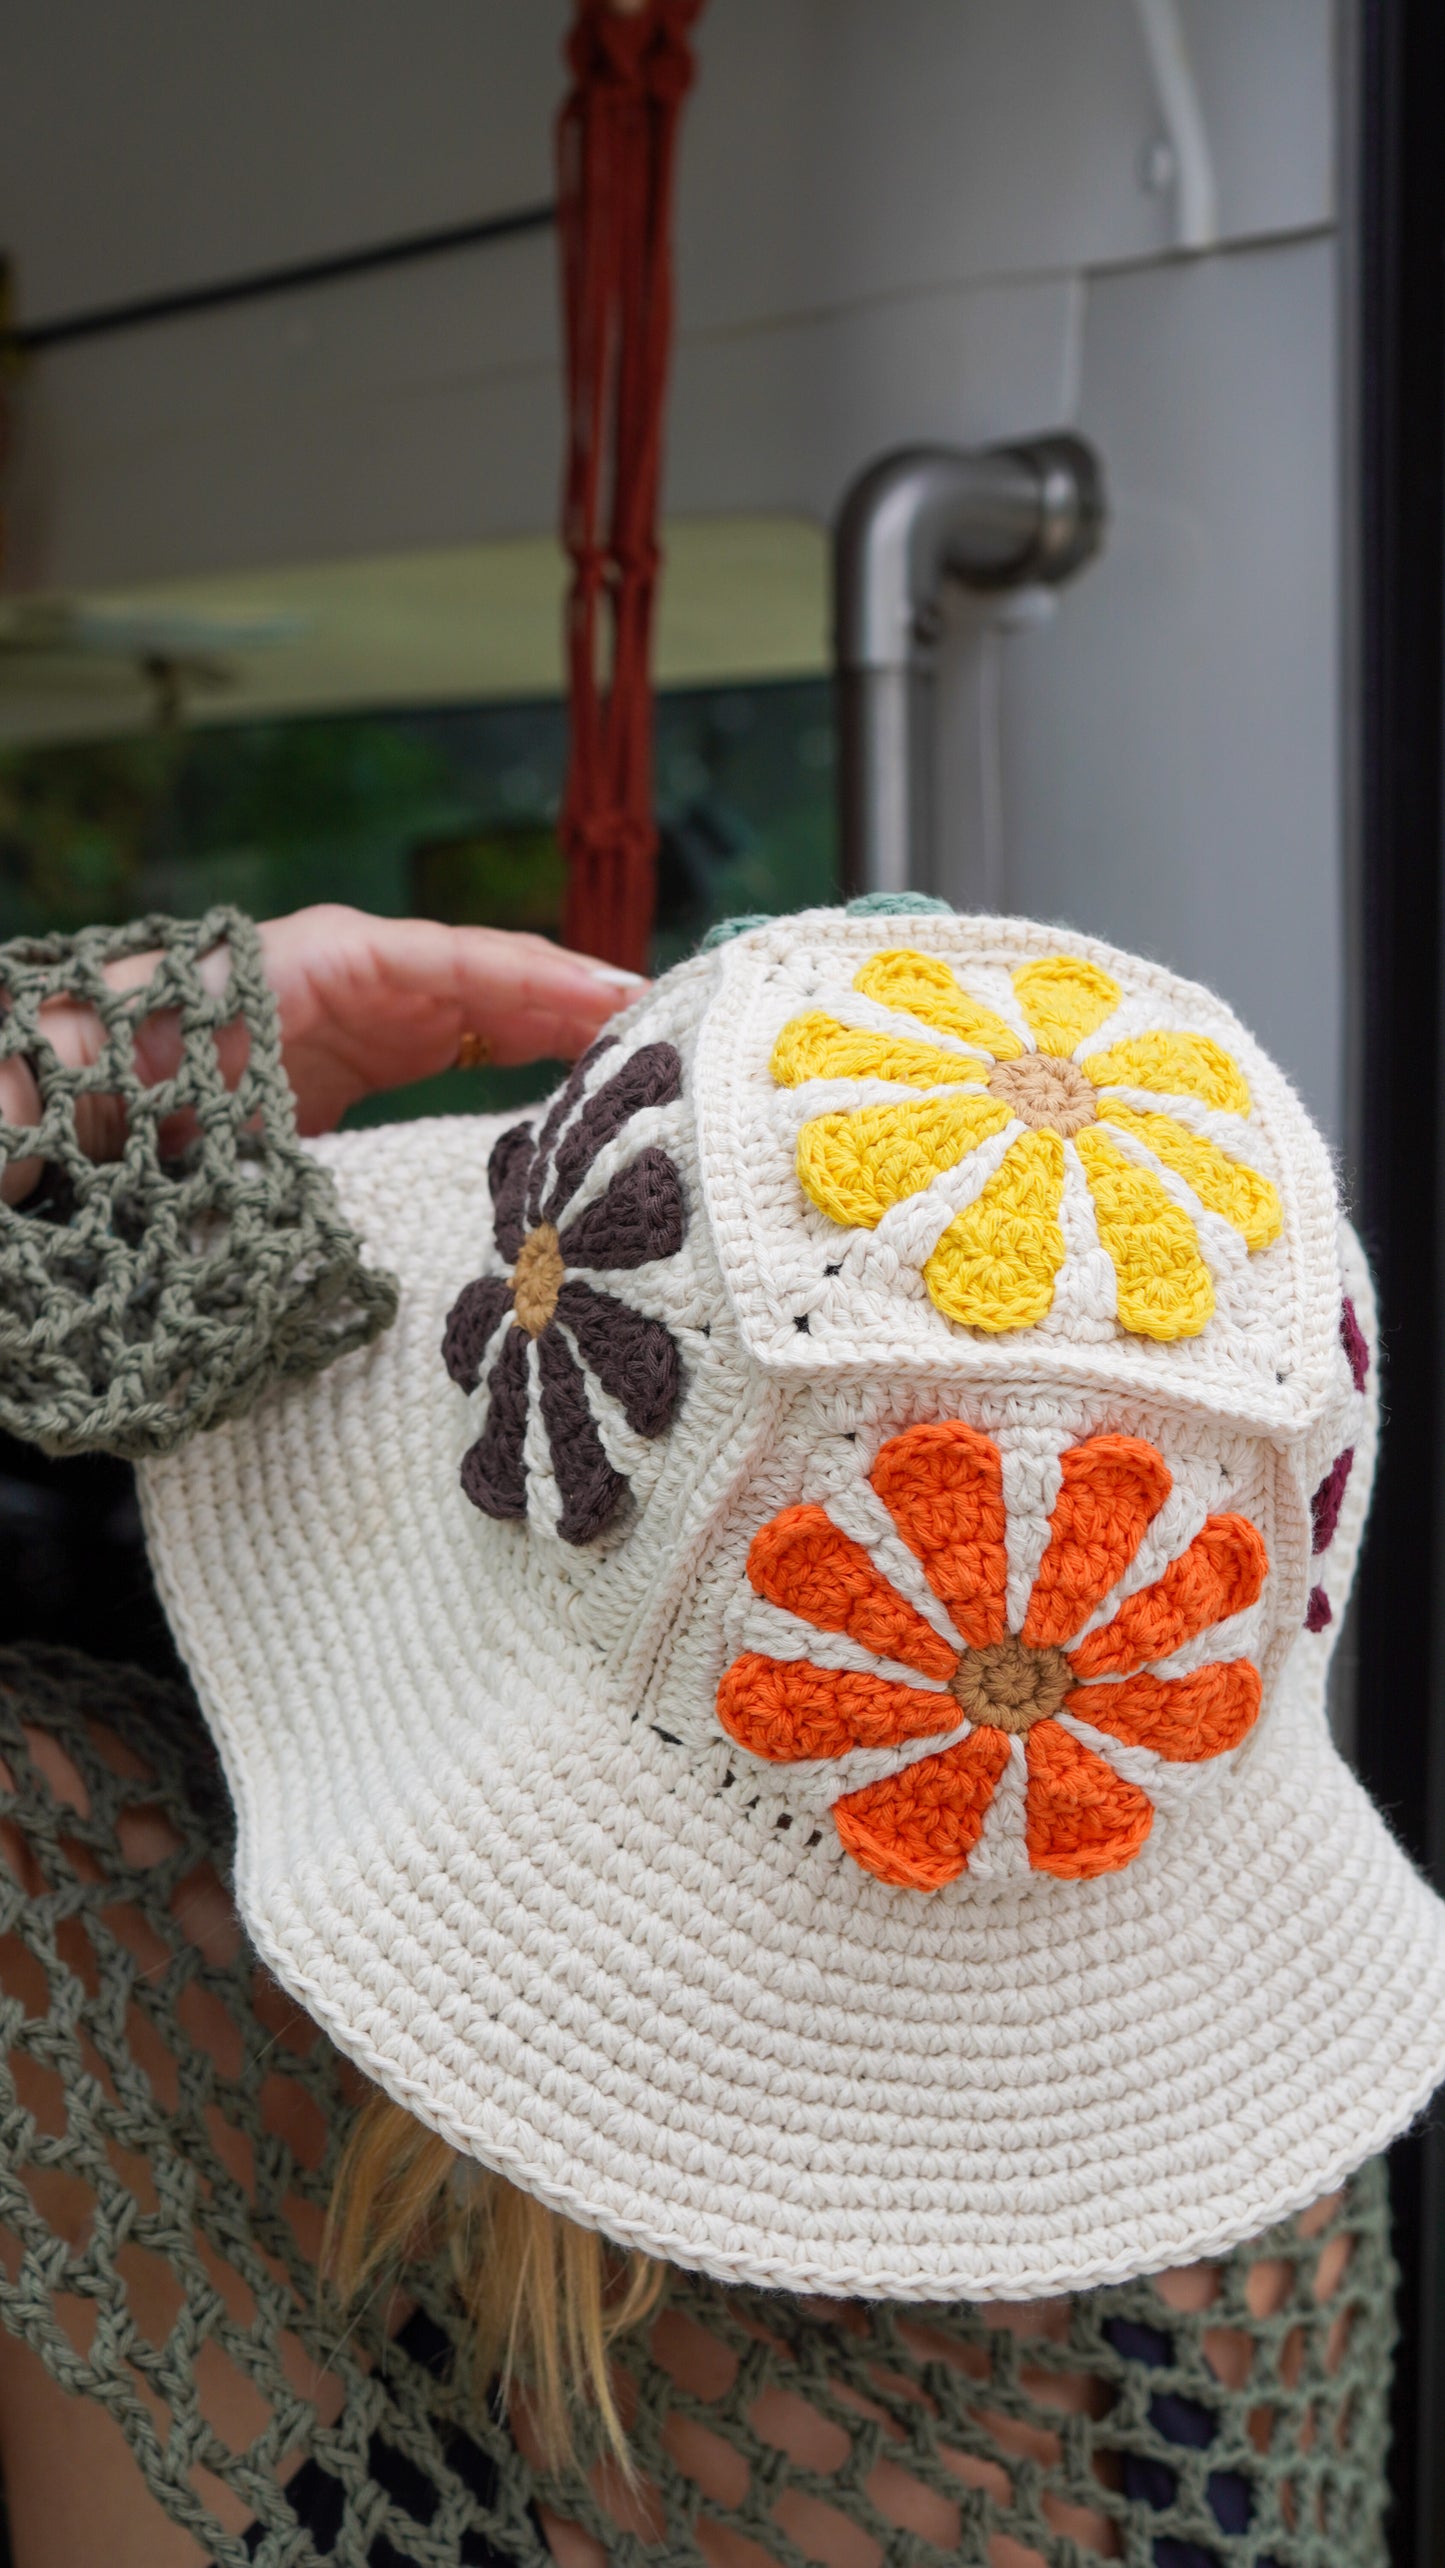 Waimea Crochet Hat